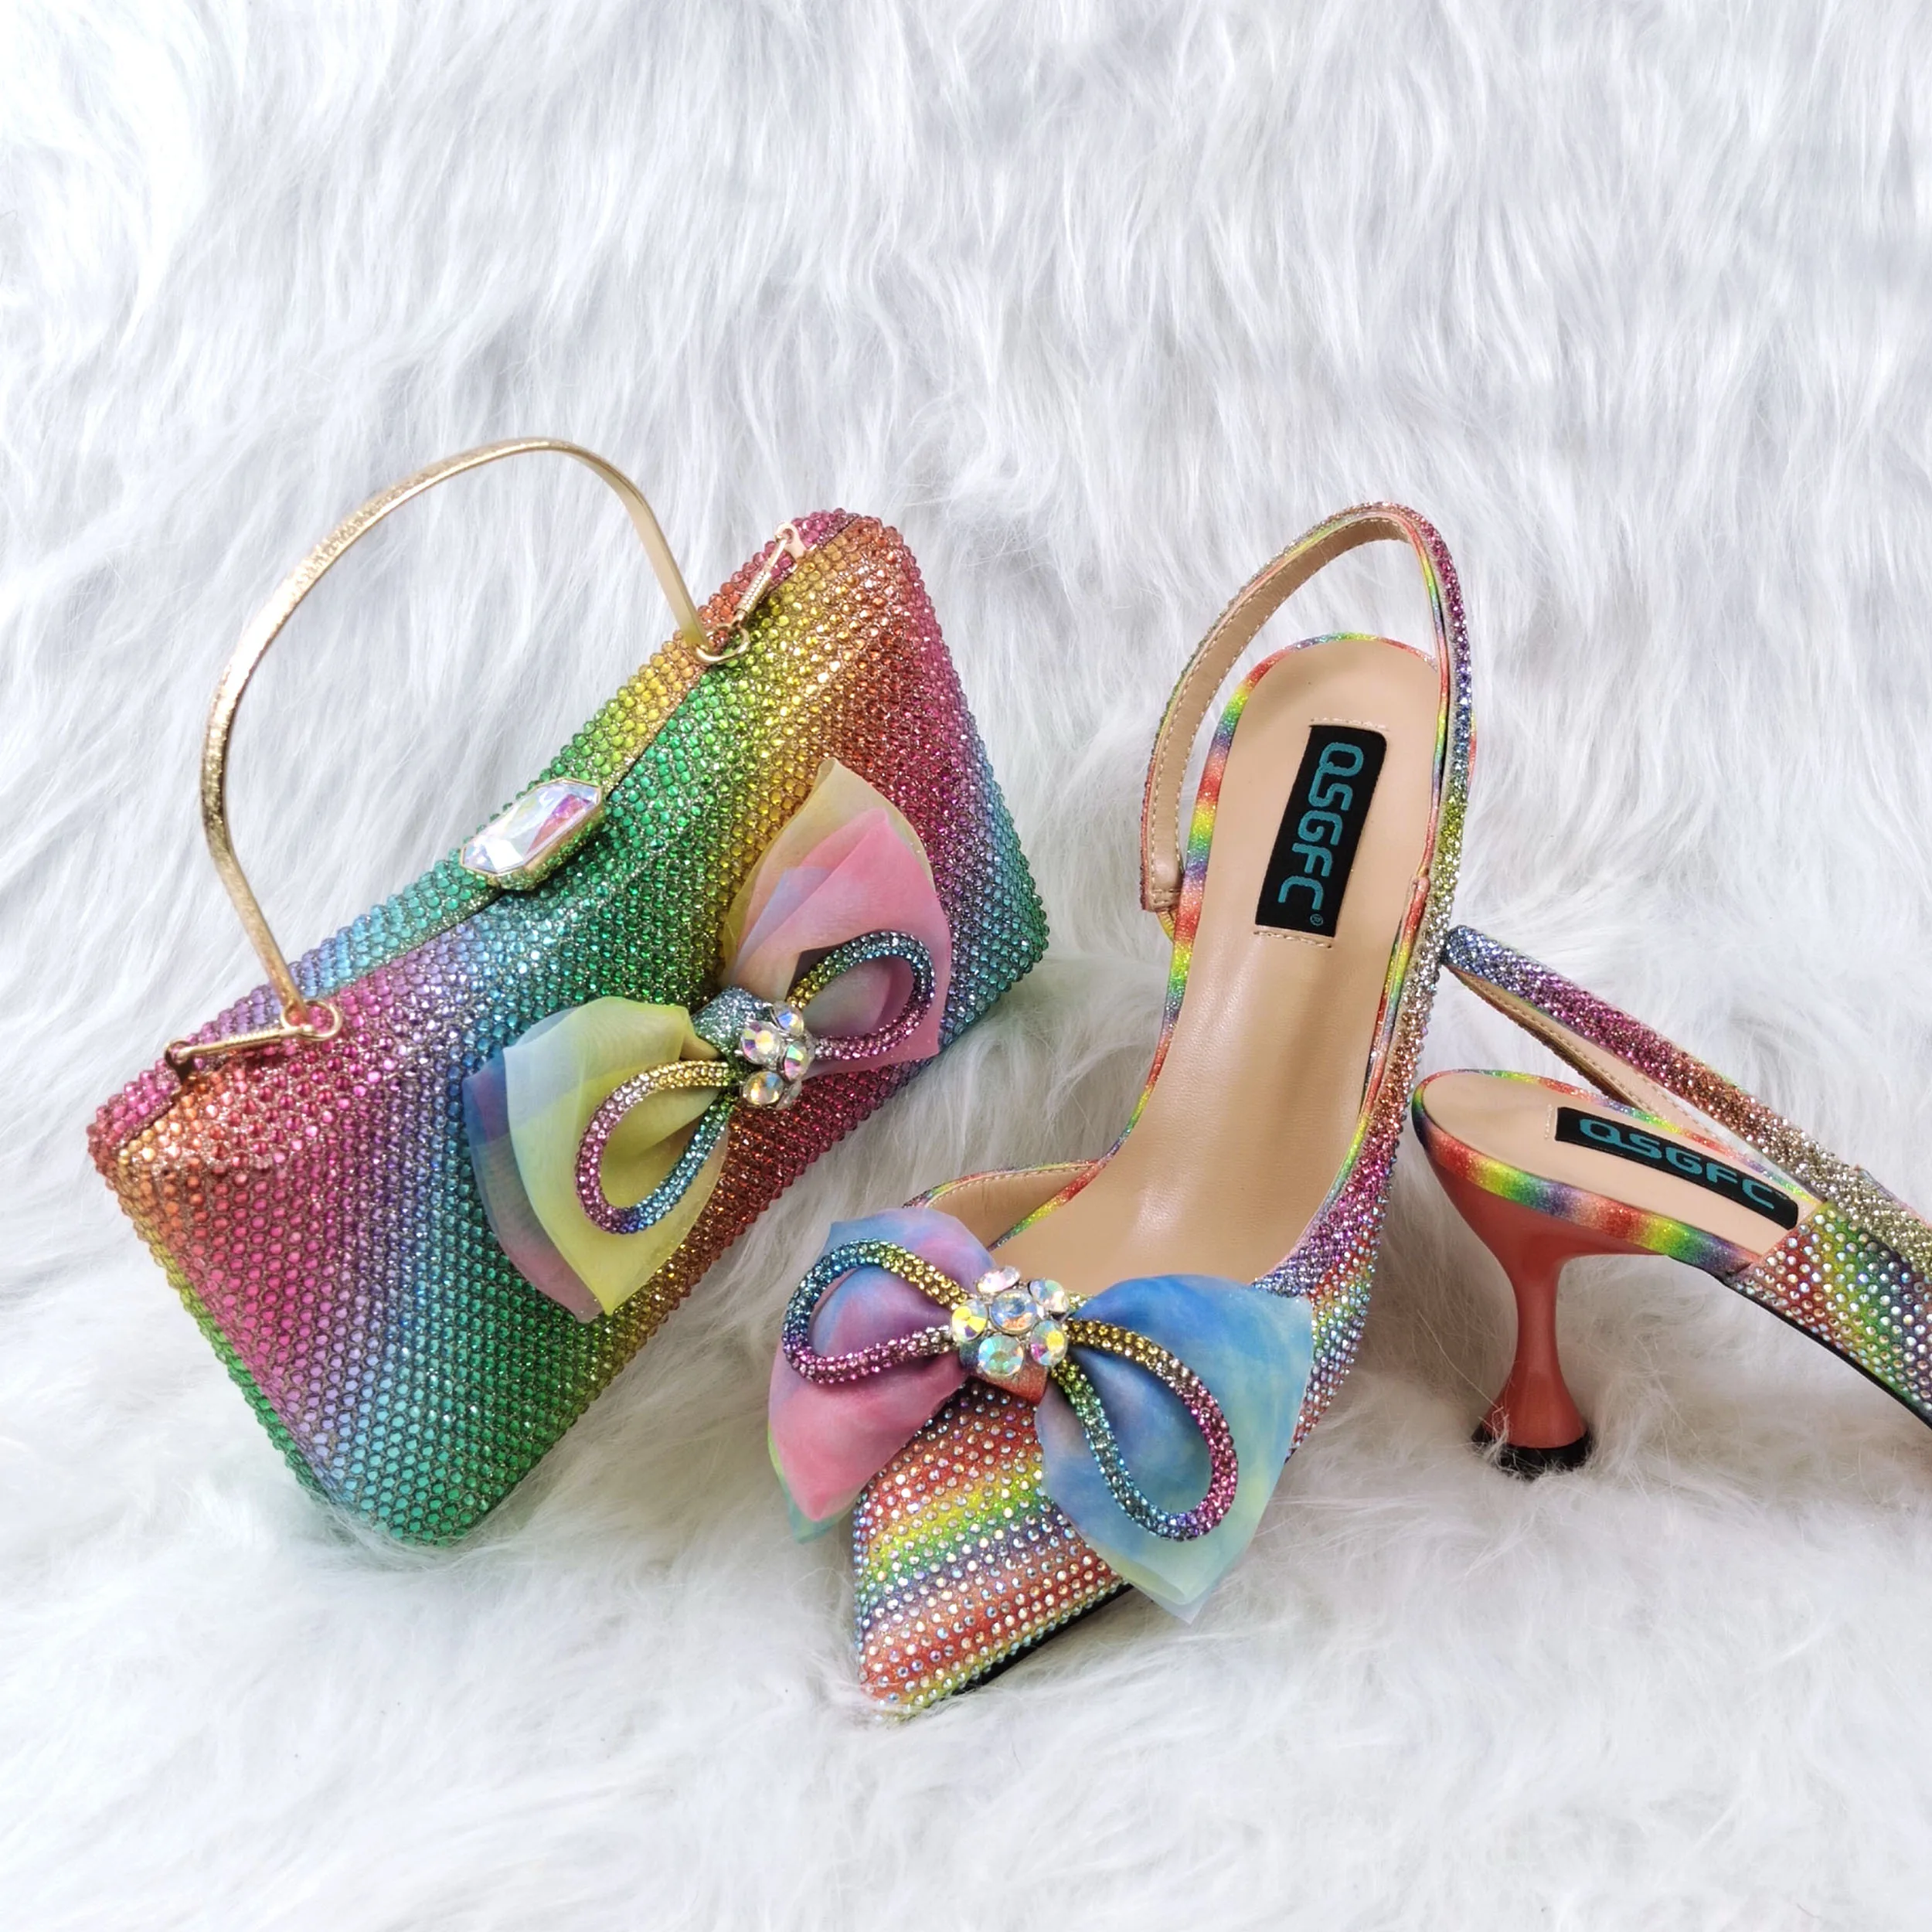 Designer Shoes | Isabella - Multi-Colored Peep Toe Pump Heels